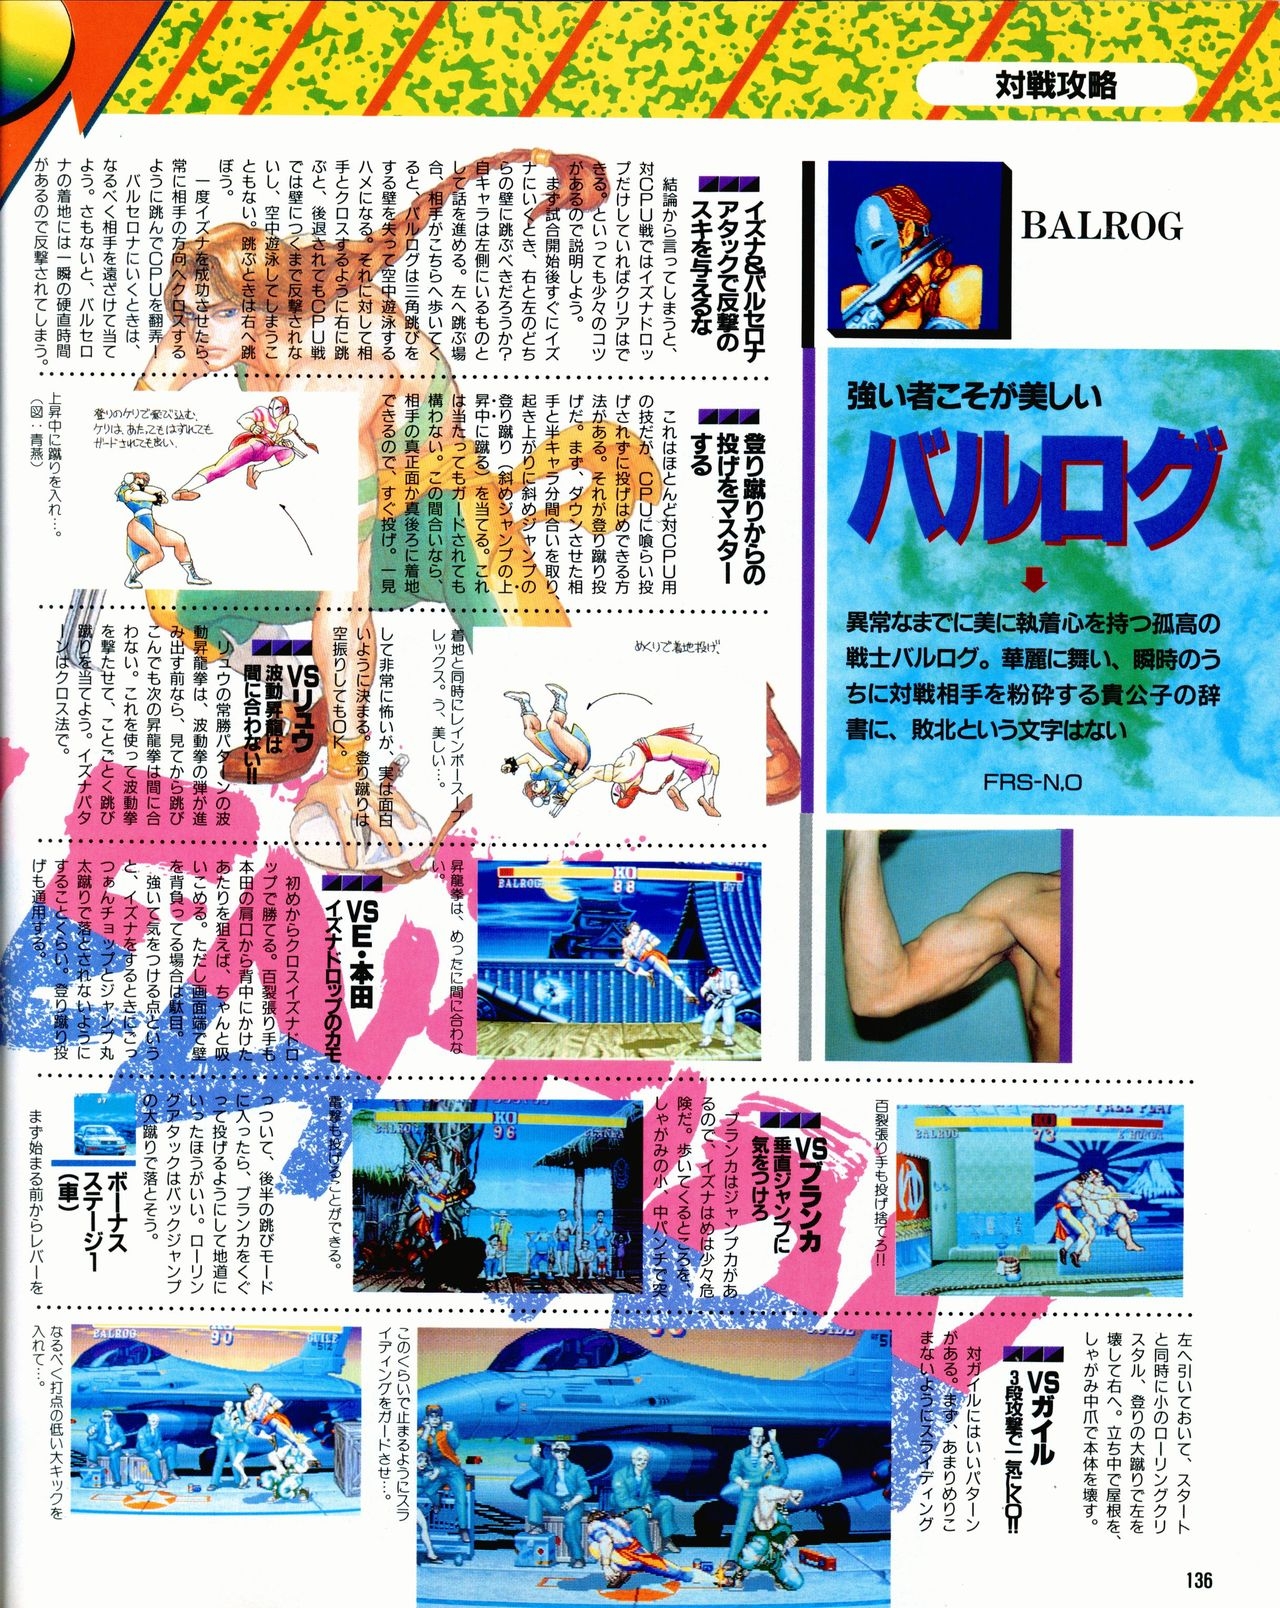 Street Fighter II Dash - Gamest special issue 77 137